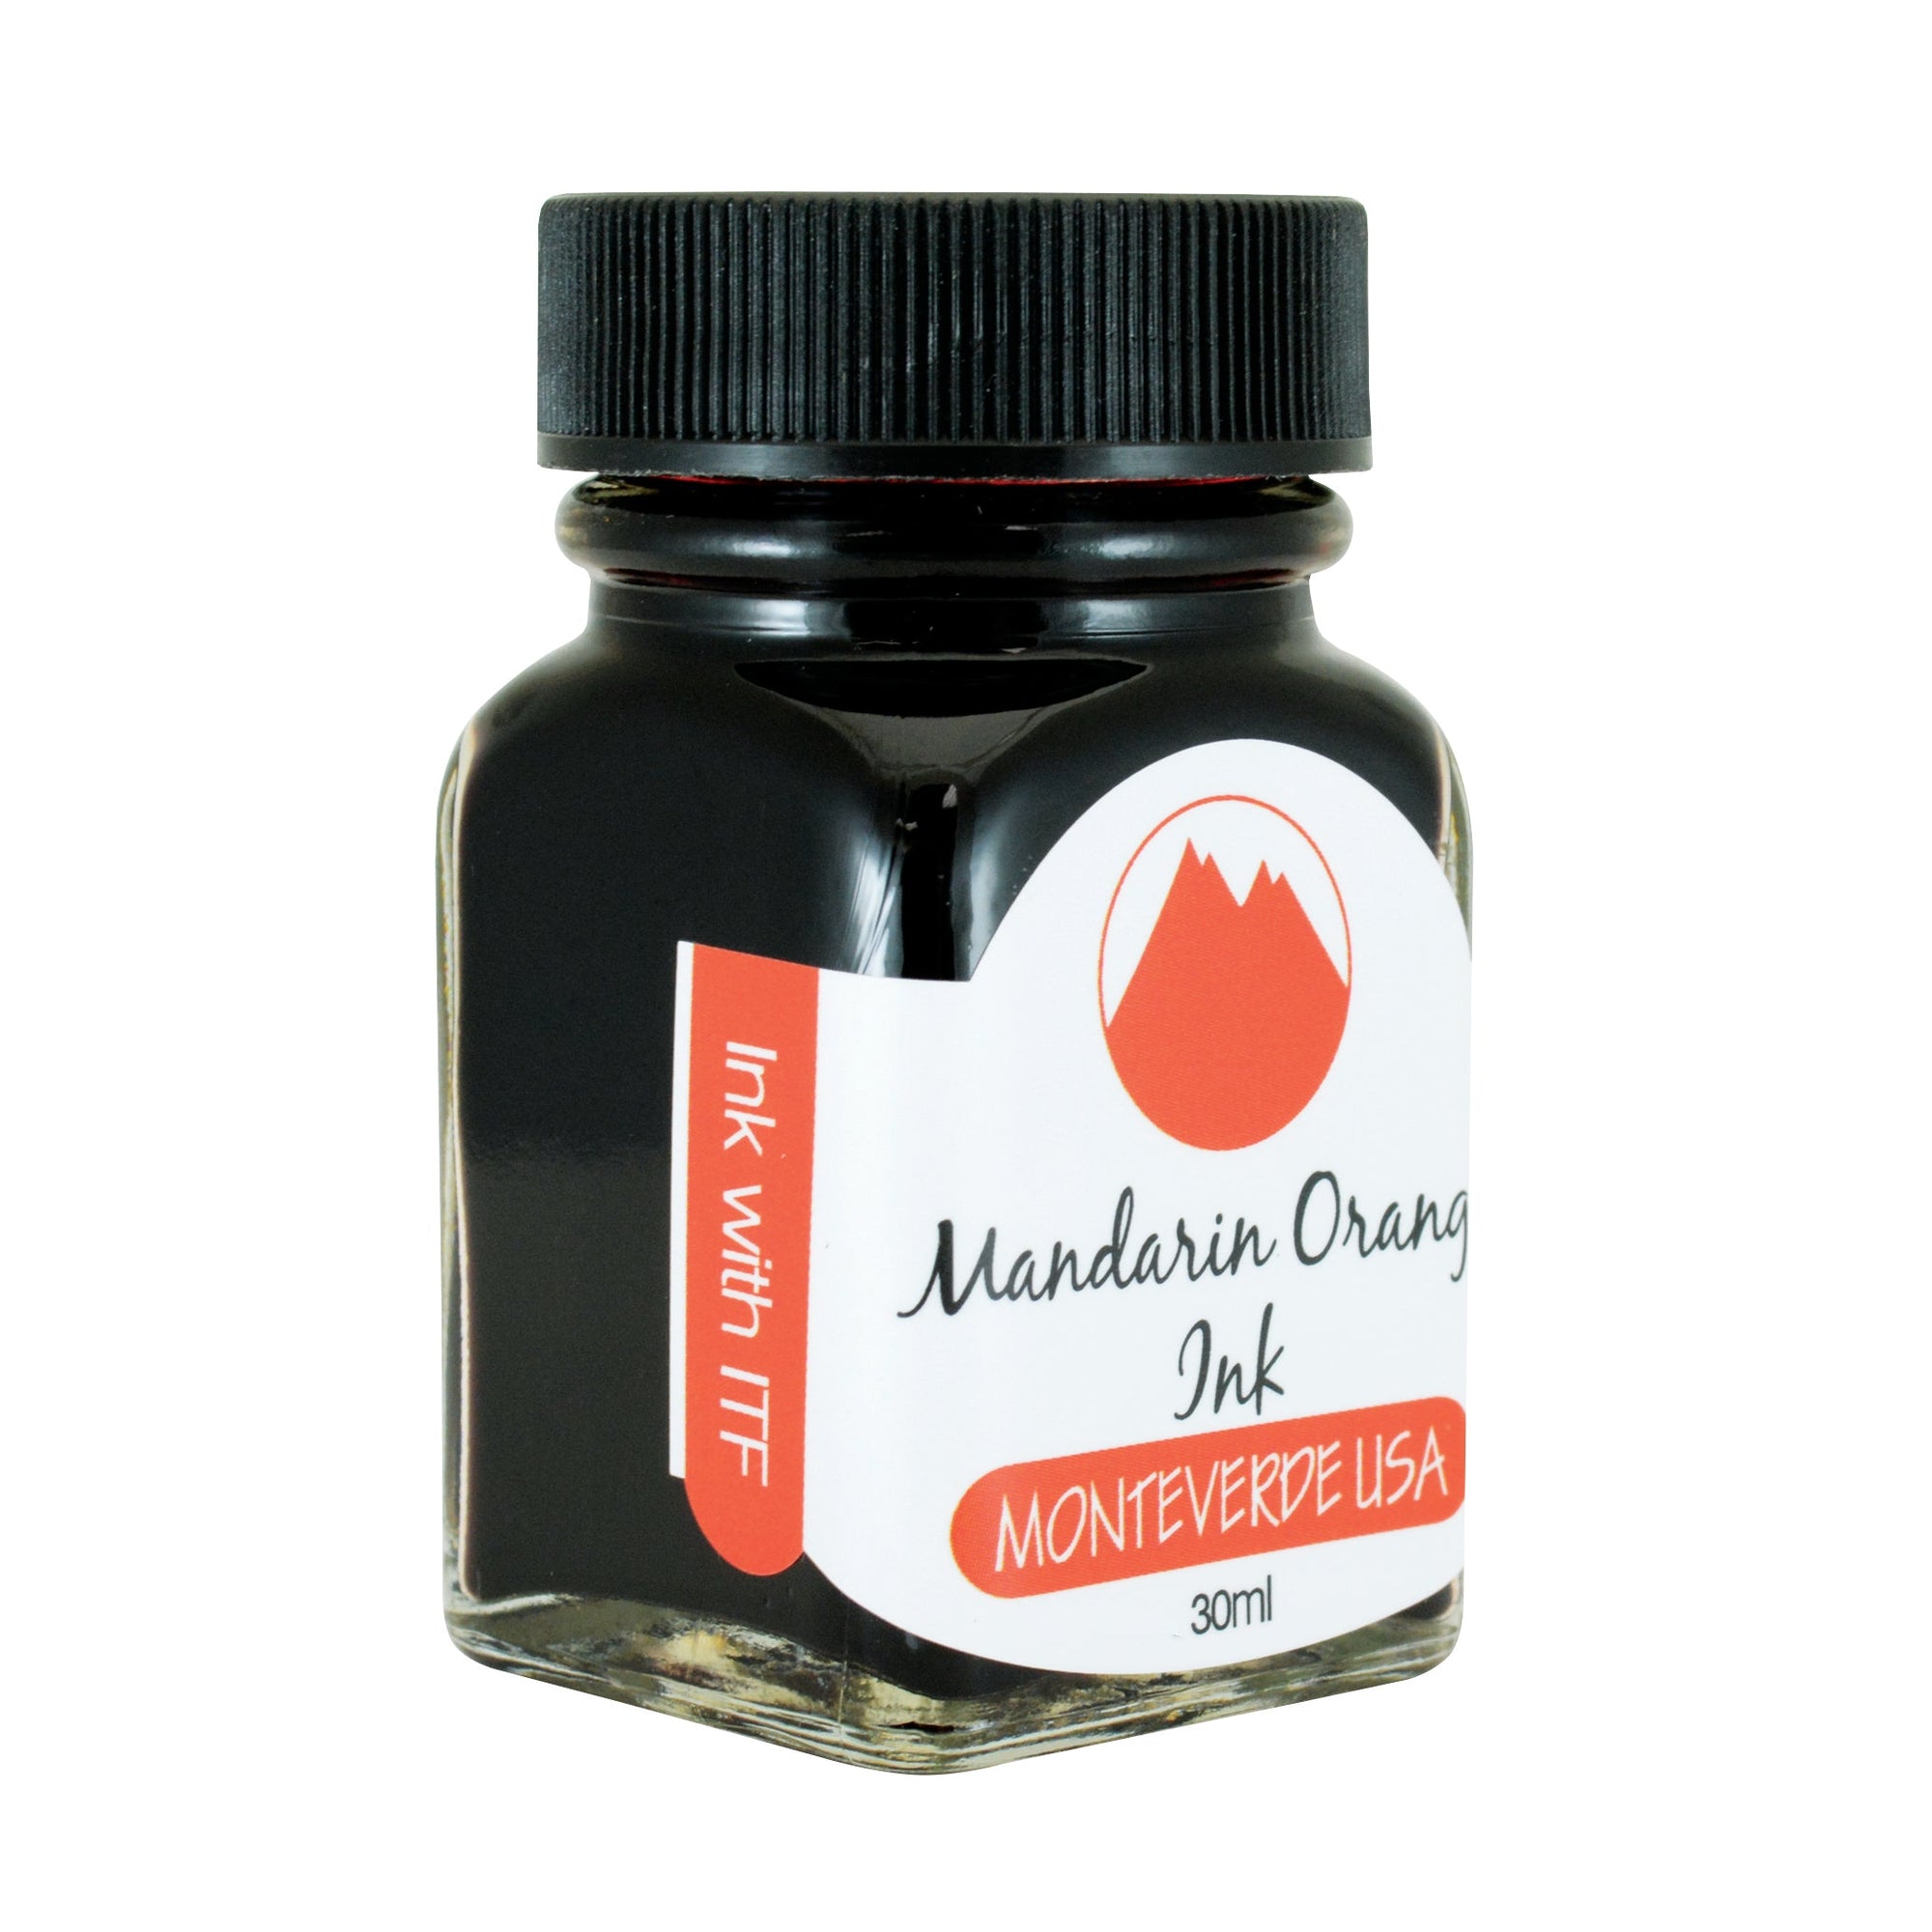 Monterverde Ink Core 30ml - Mandarin orange - Blesket Canada